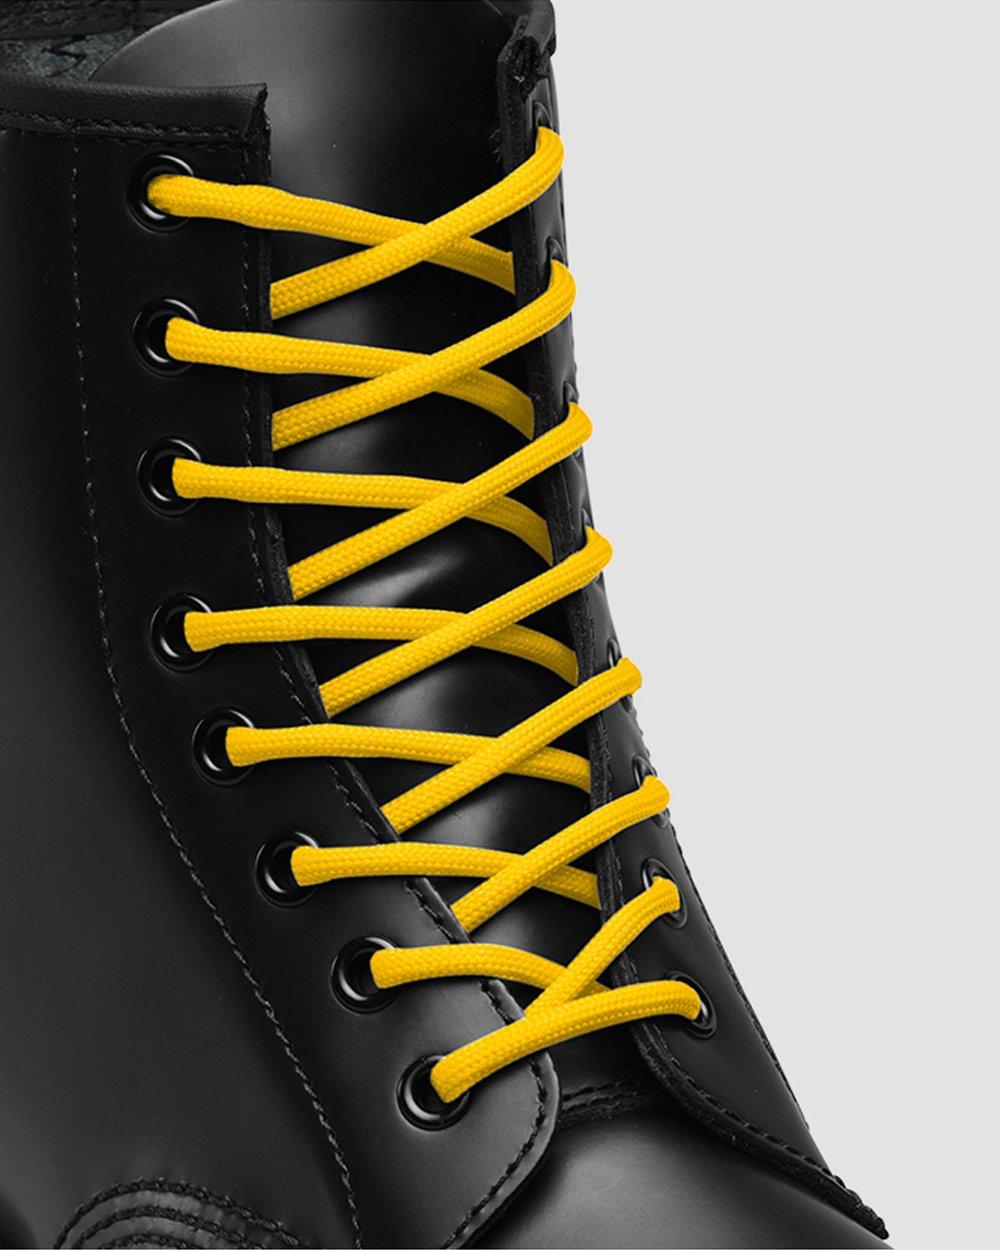 140cm 黃色圓形花邊鞋帶 (8-10孔鞋)